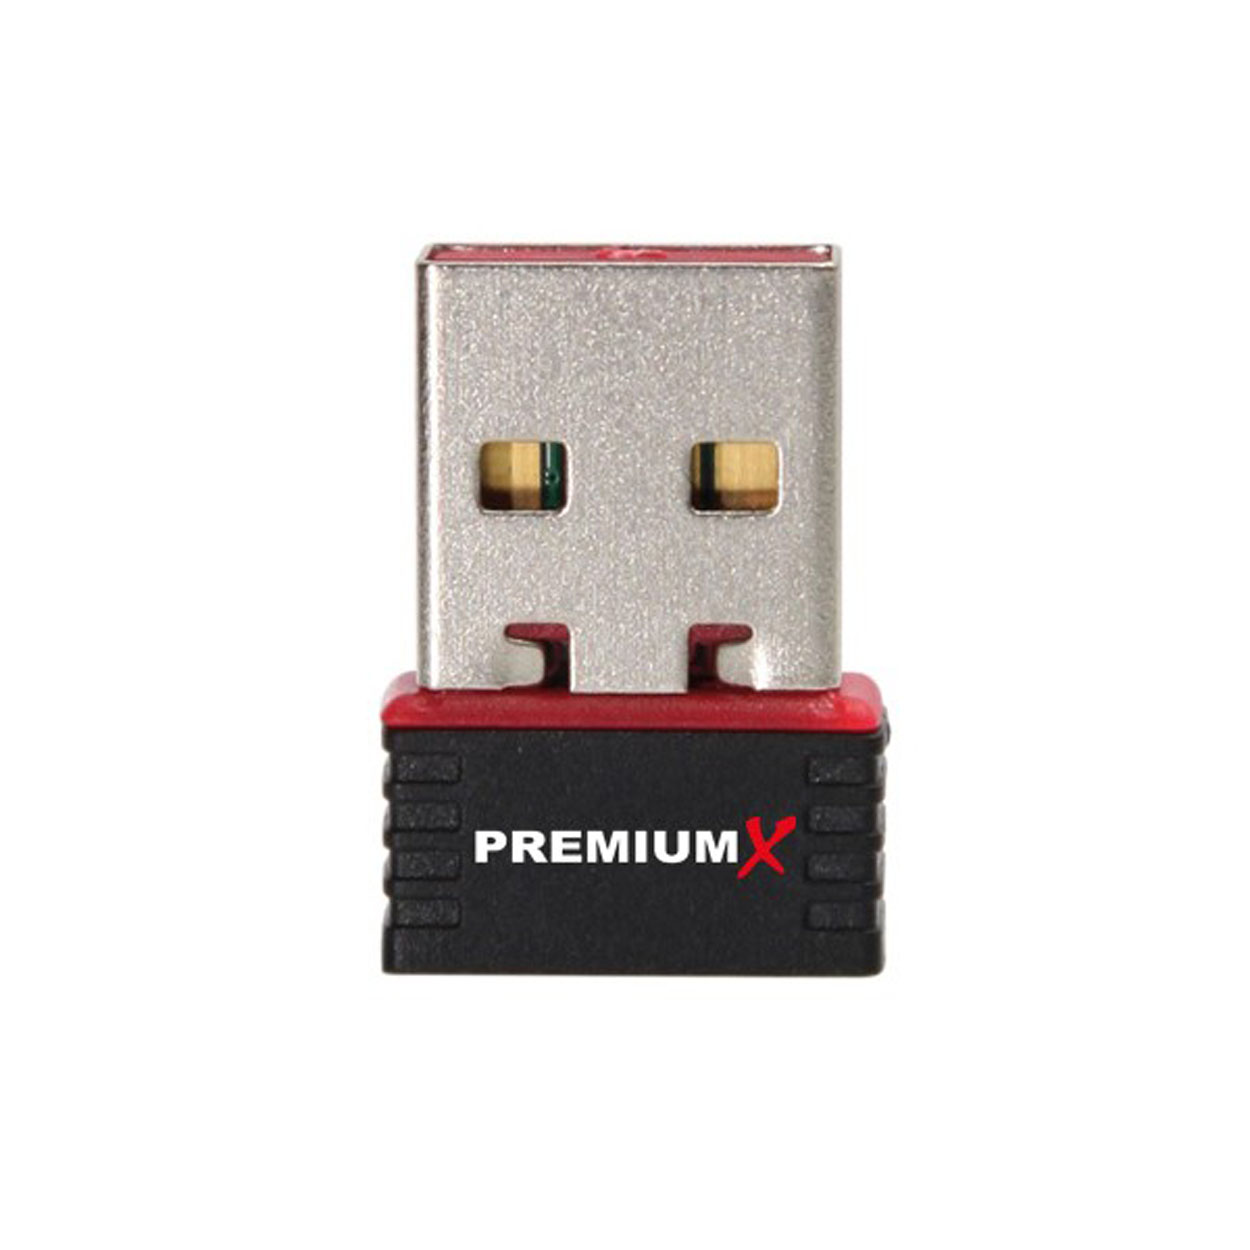 PREMIUMX PX150 MINI WLAN-Adapter, Adapter Mbit W-Lan USB-Micro-Pen Stick Schwarz 150 N Wireless WLAN